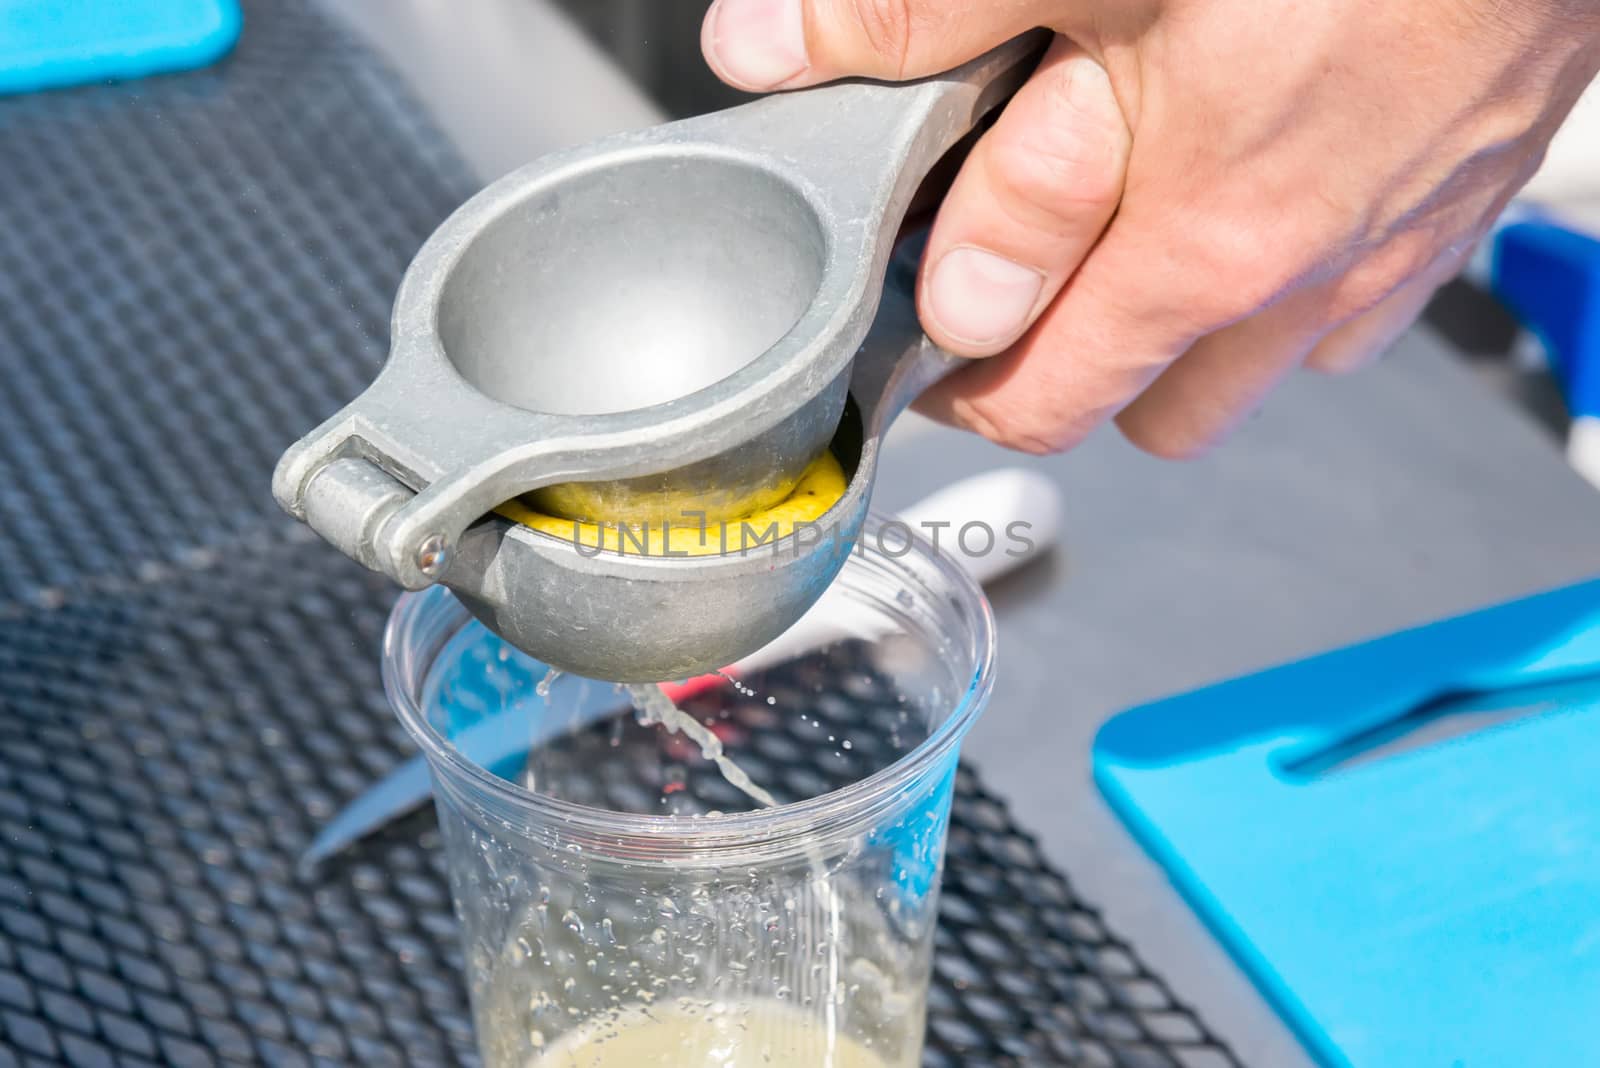 the manual metal juicer lemon in a plastic Cup